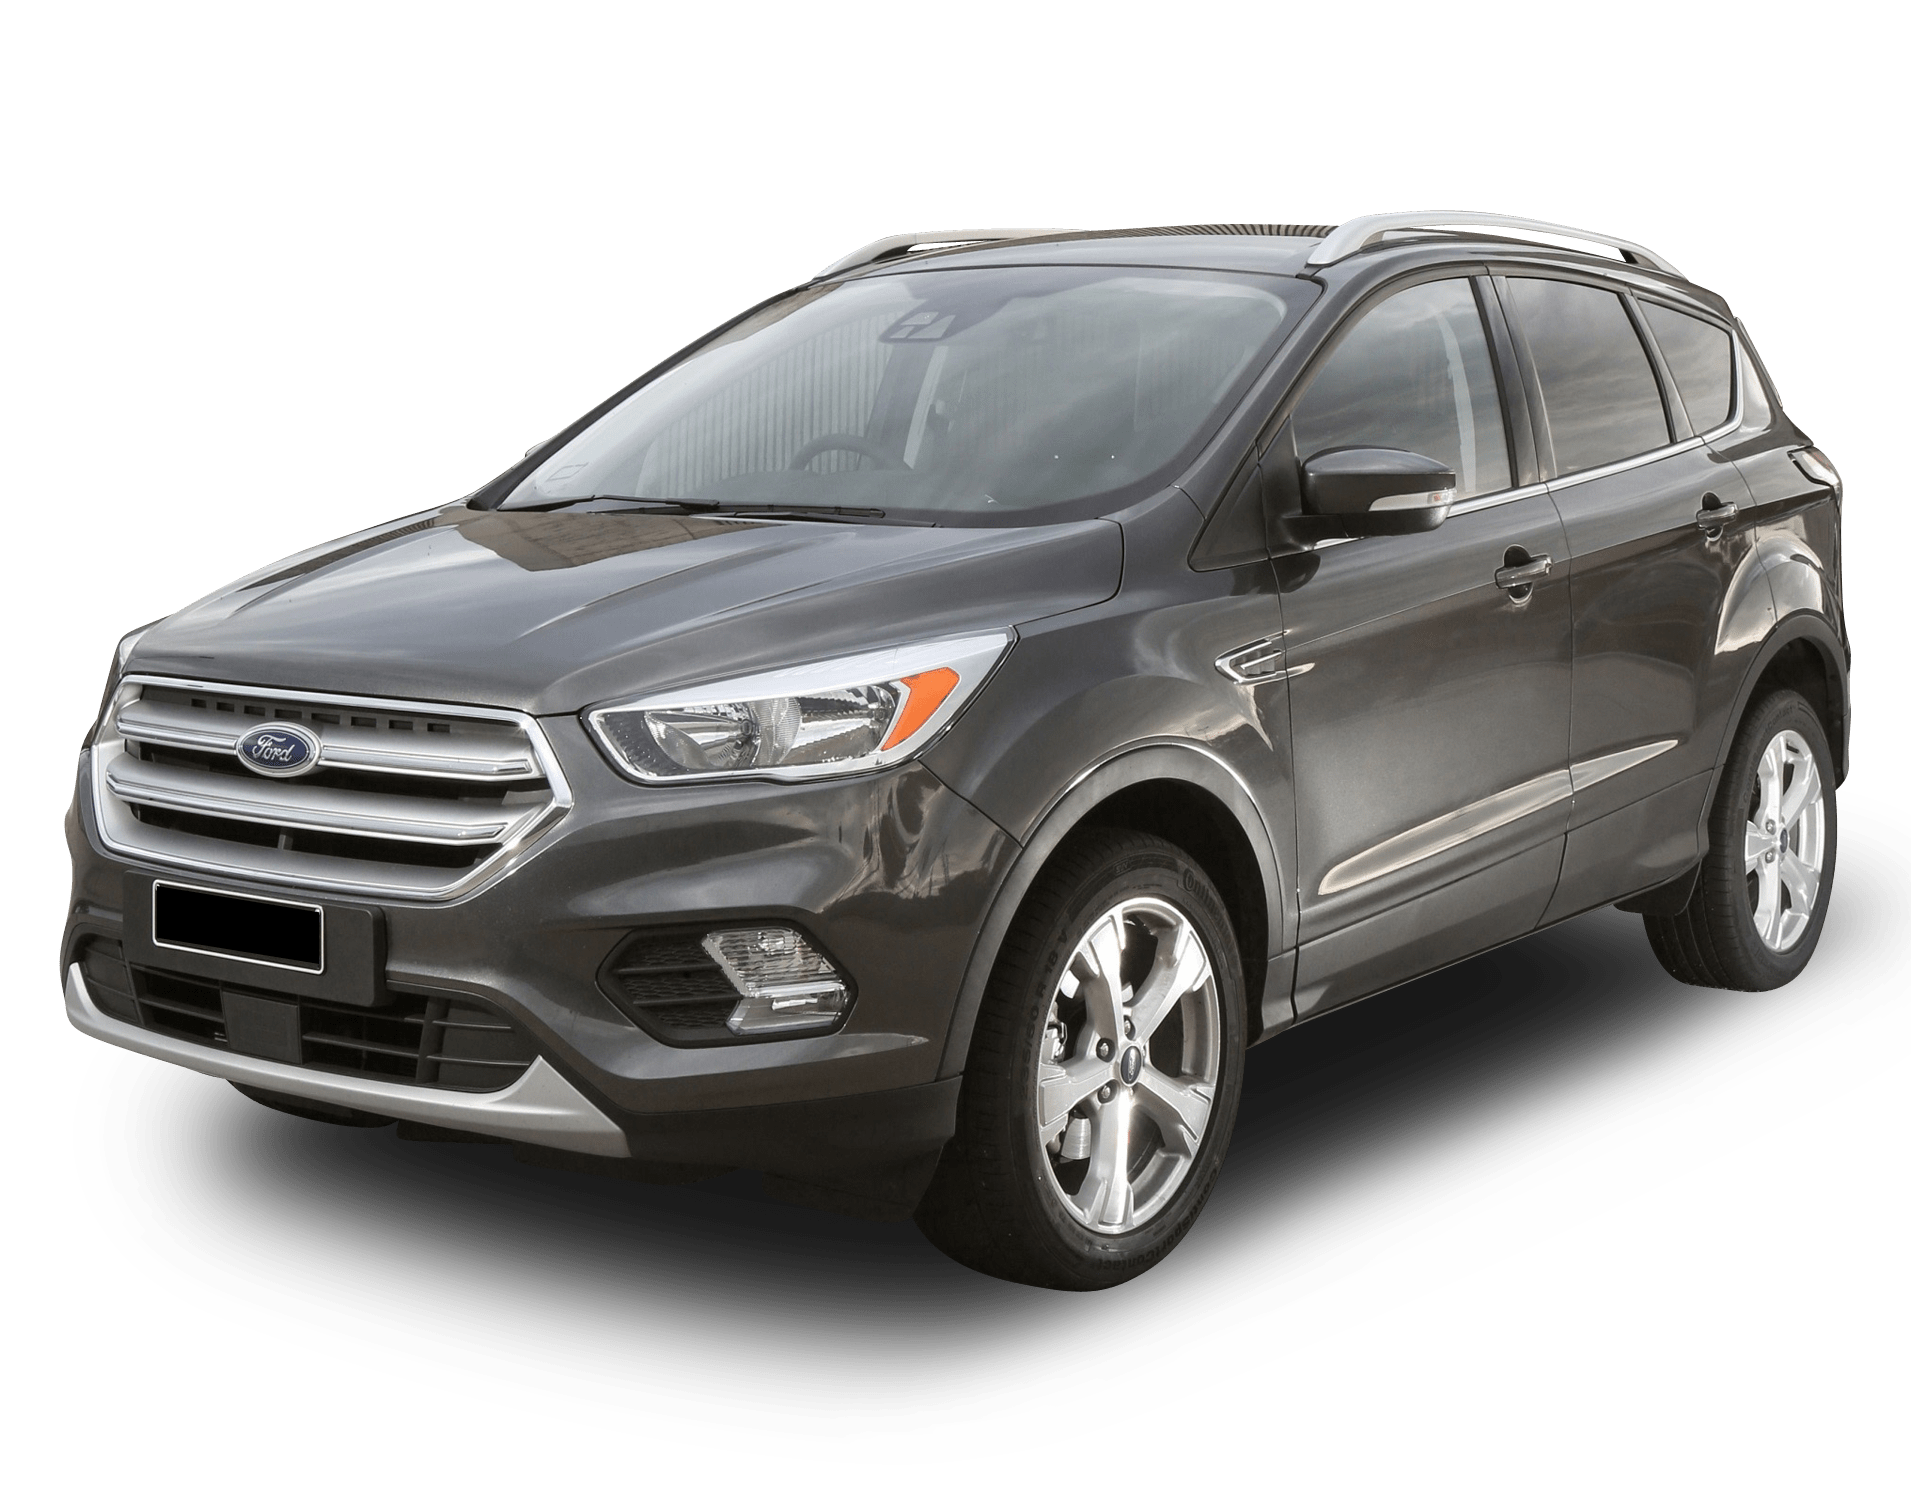 Ford Escape Review Price For Sale Colours Interior